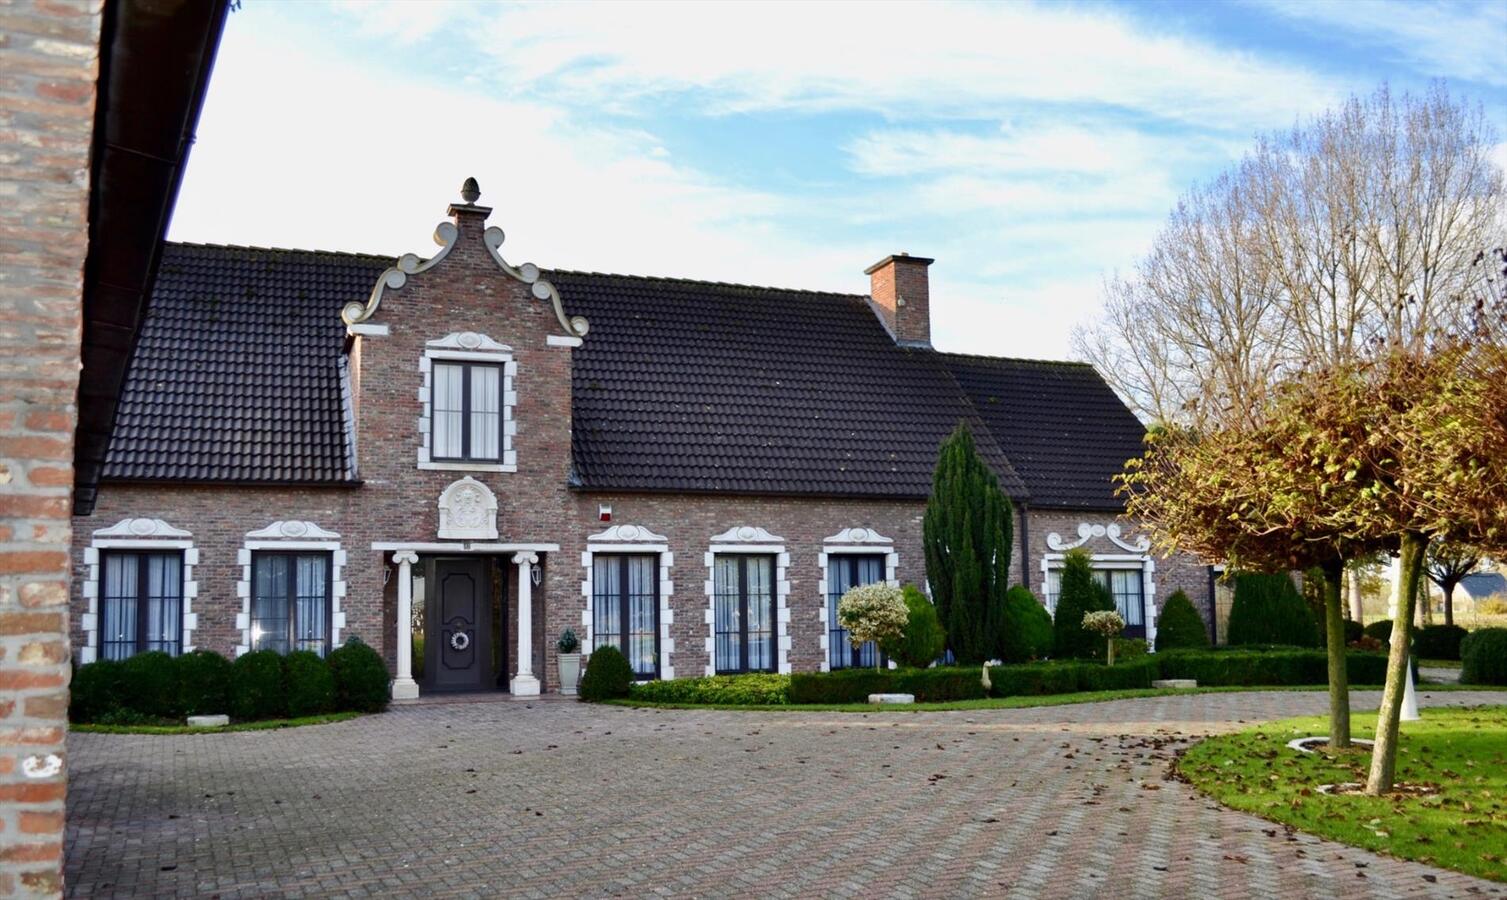 Property sold in Kruibeke